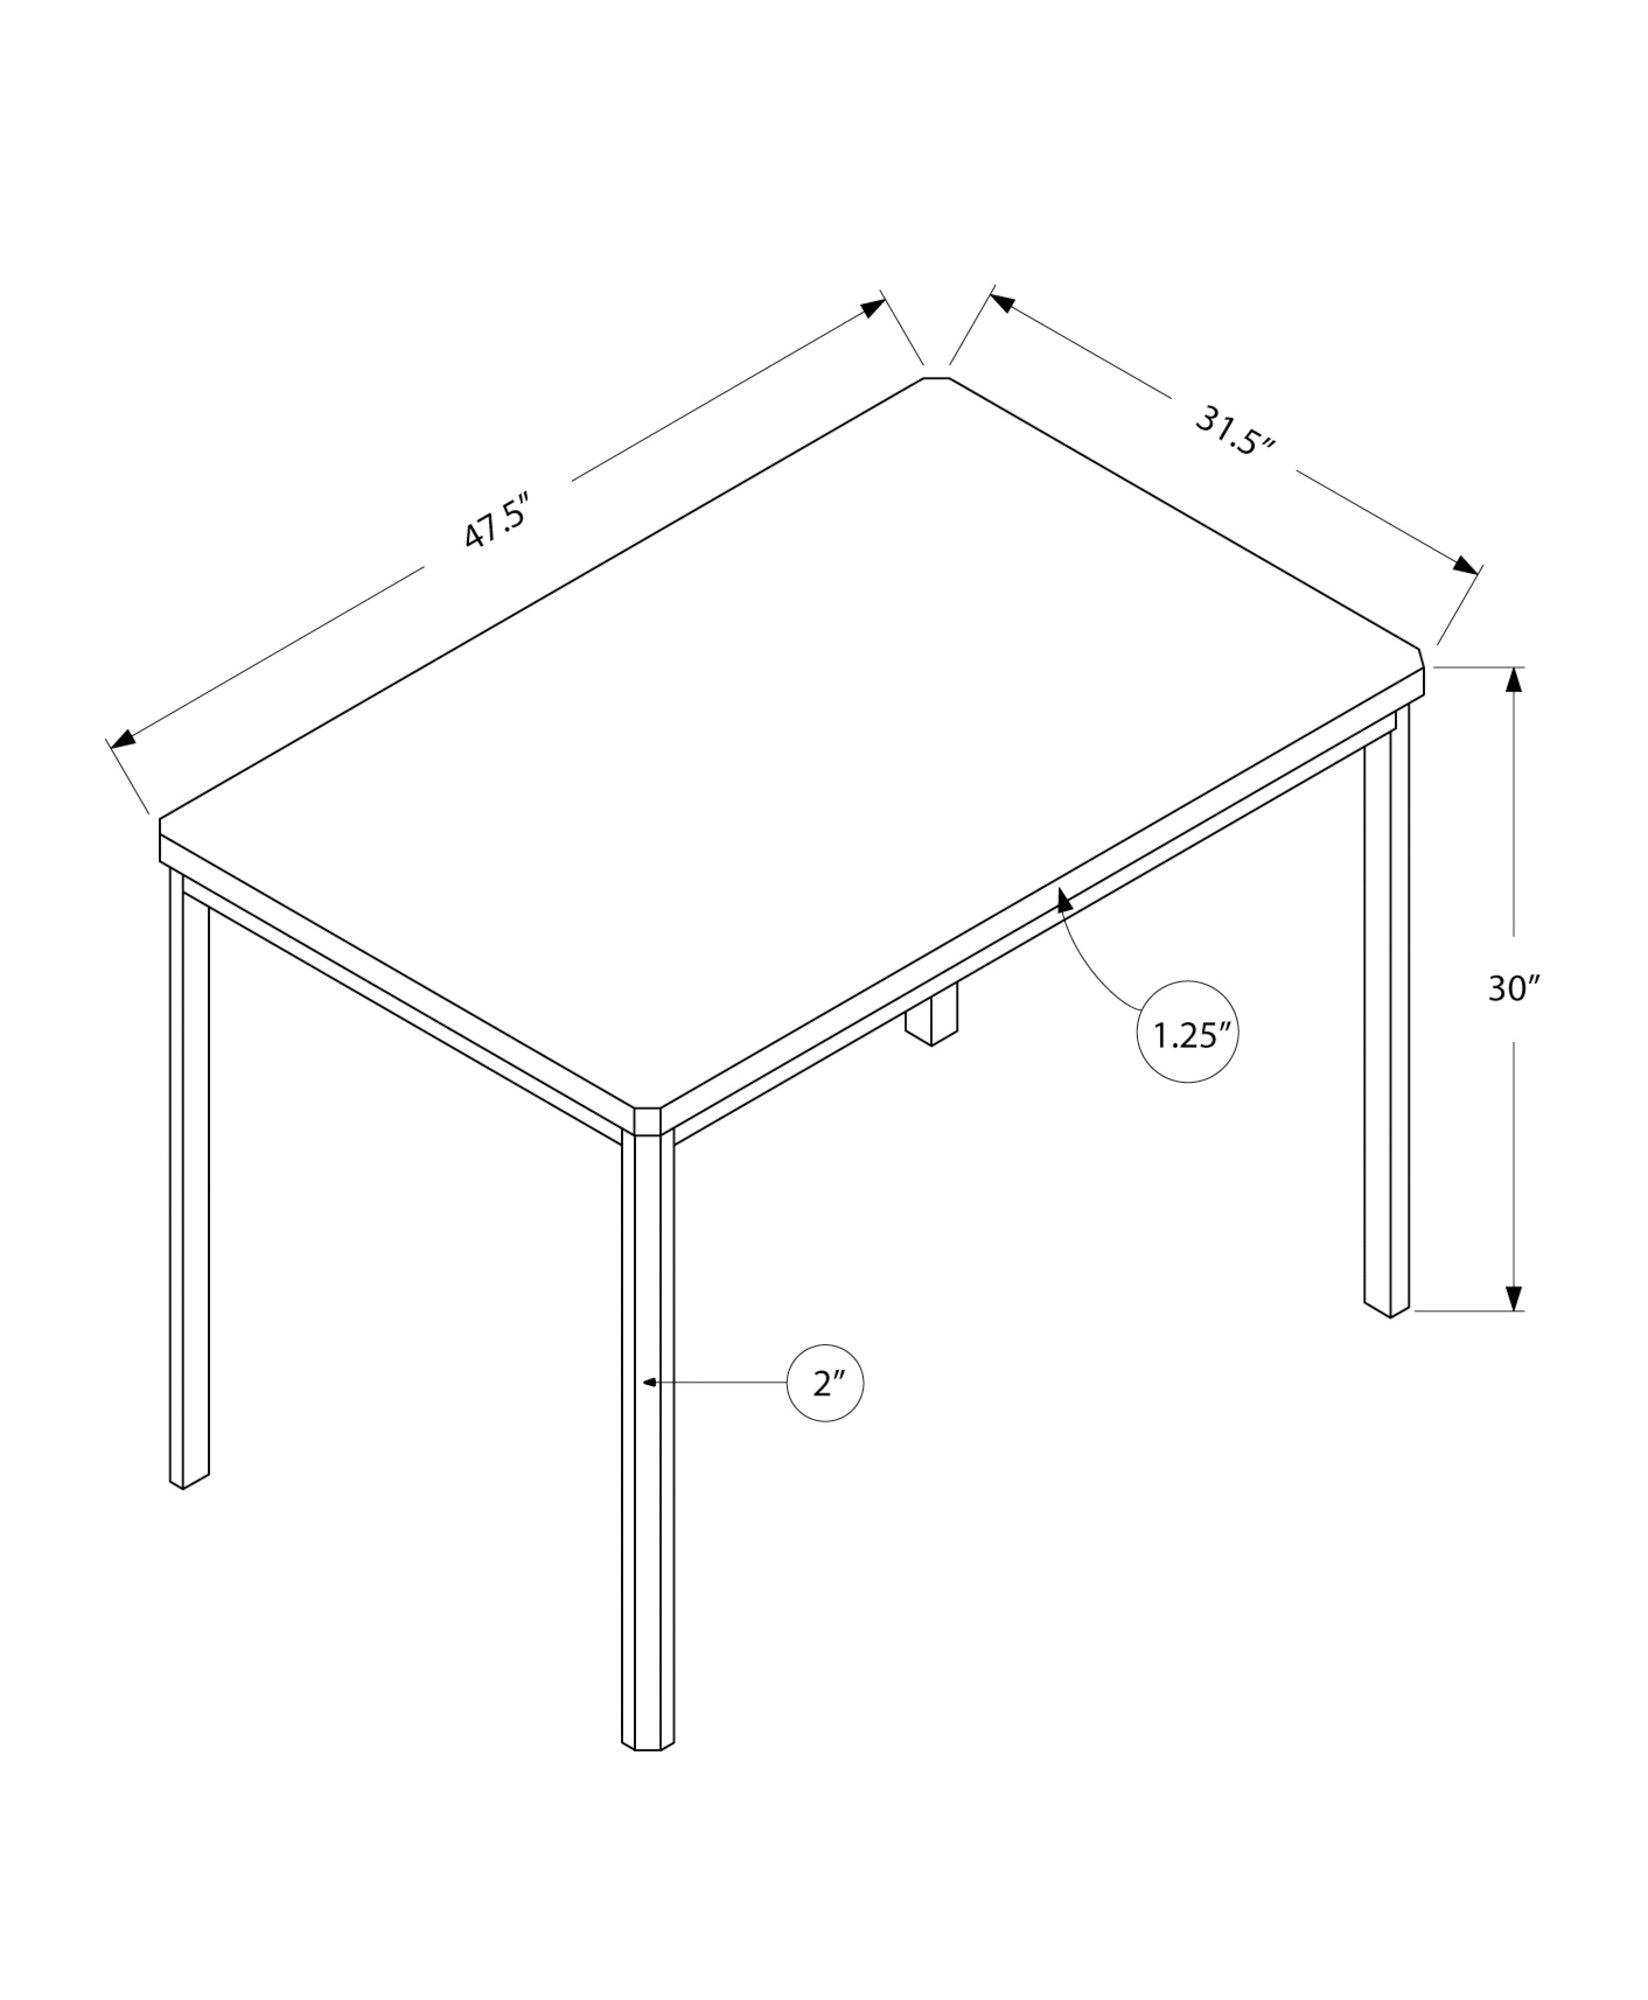 MN-231042    Dining Table, 48" Rectangular, Metal, Kitchen, Dining Room, Metal Legs, Laminate, Dark Taupe, Chrome, Contemporary, Modern